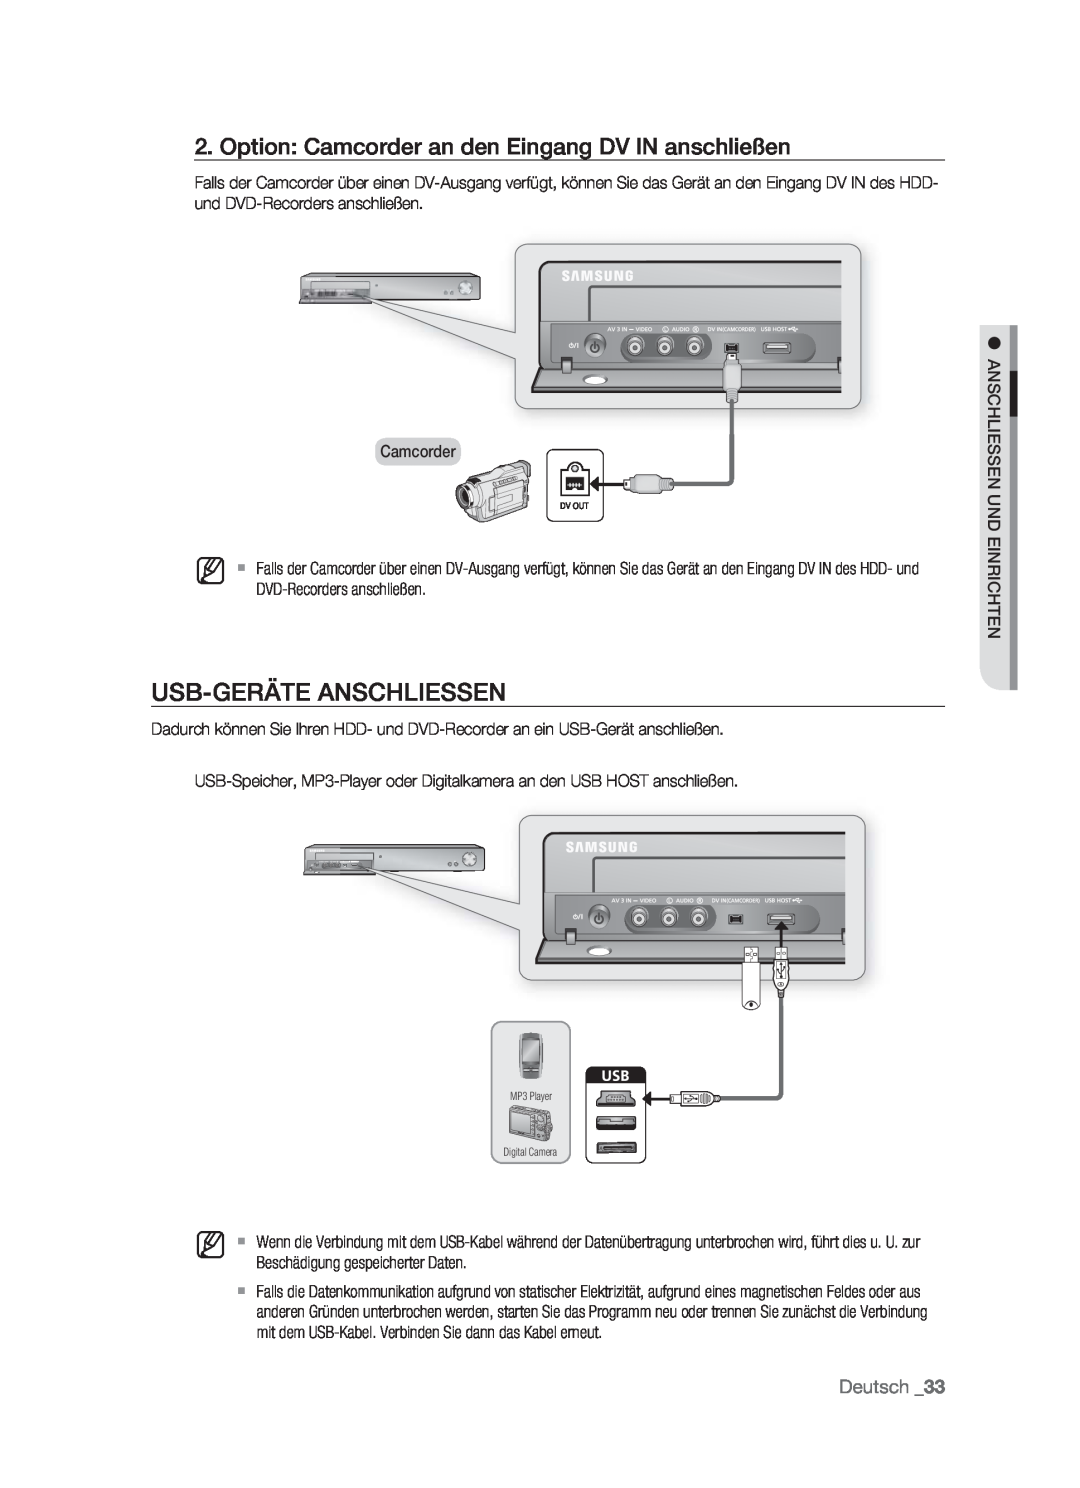 Samsung DVD-HR773/XEB manual Usb-Geräte Anschliessen, Option Camcorder an den Eingang DV IN anschließen, M  , Deutsch 